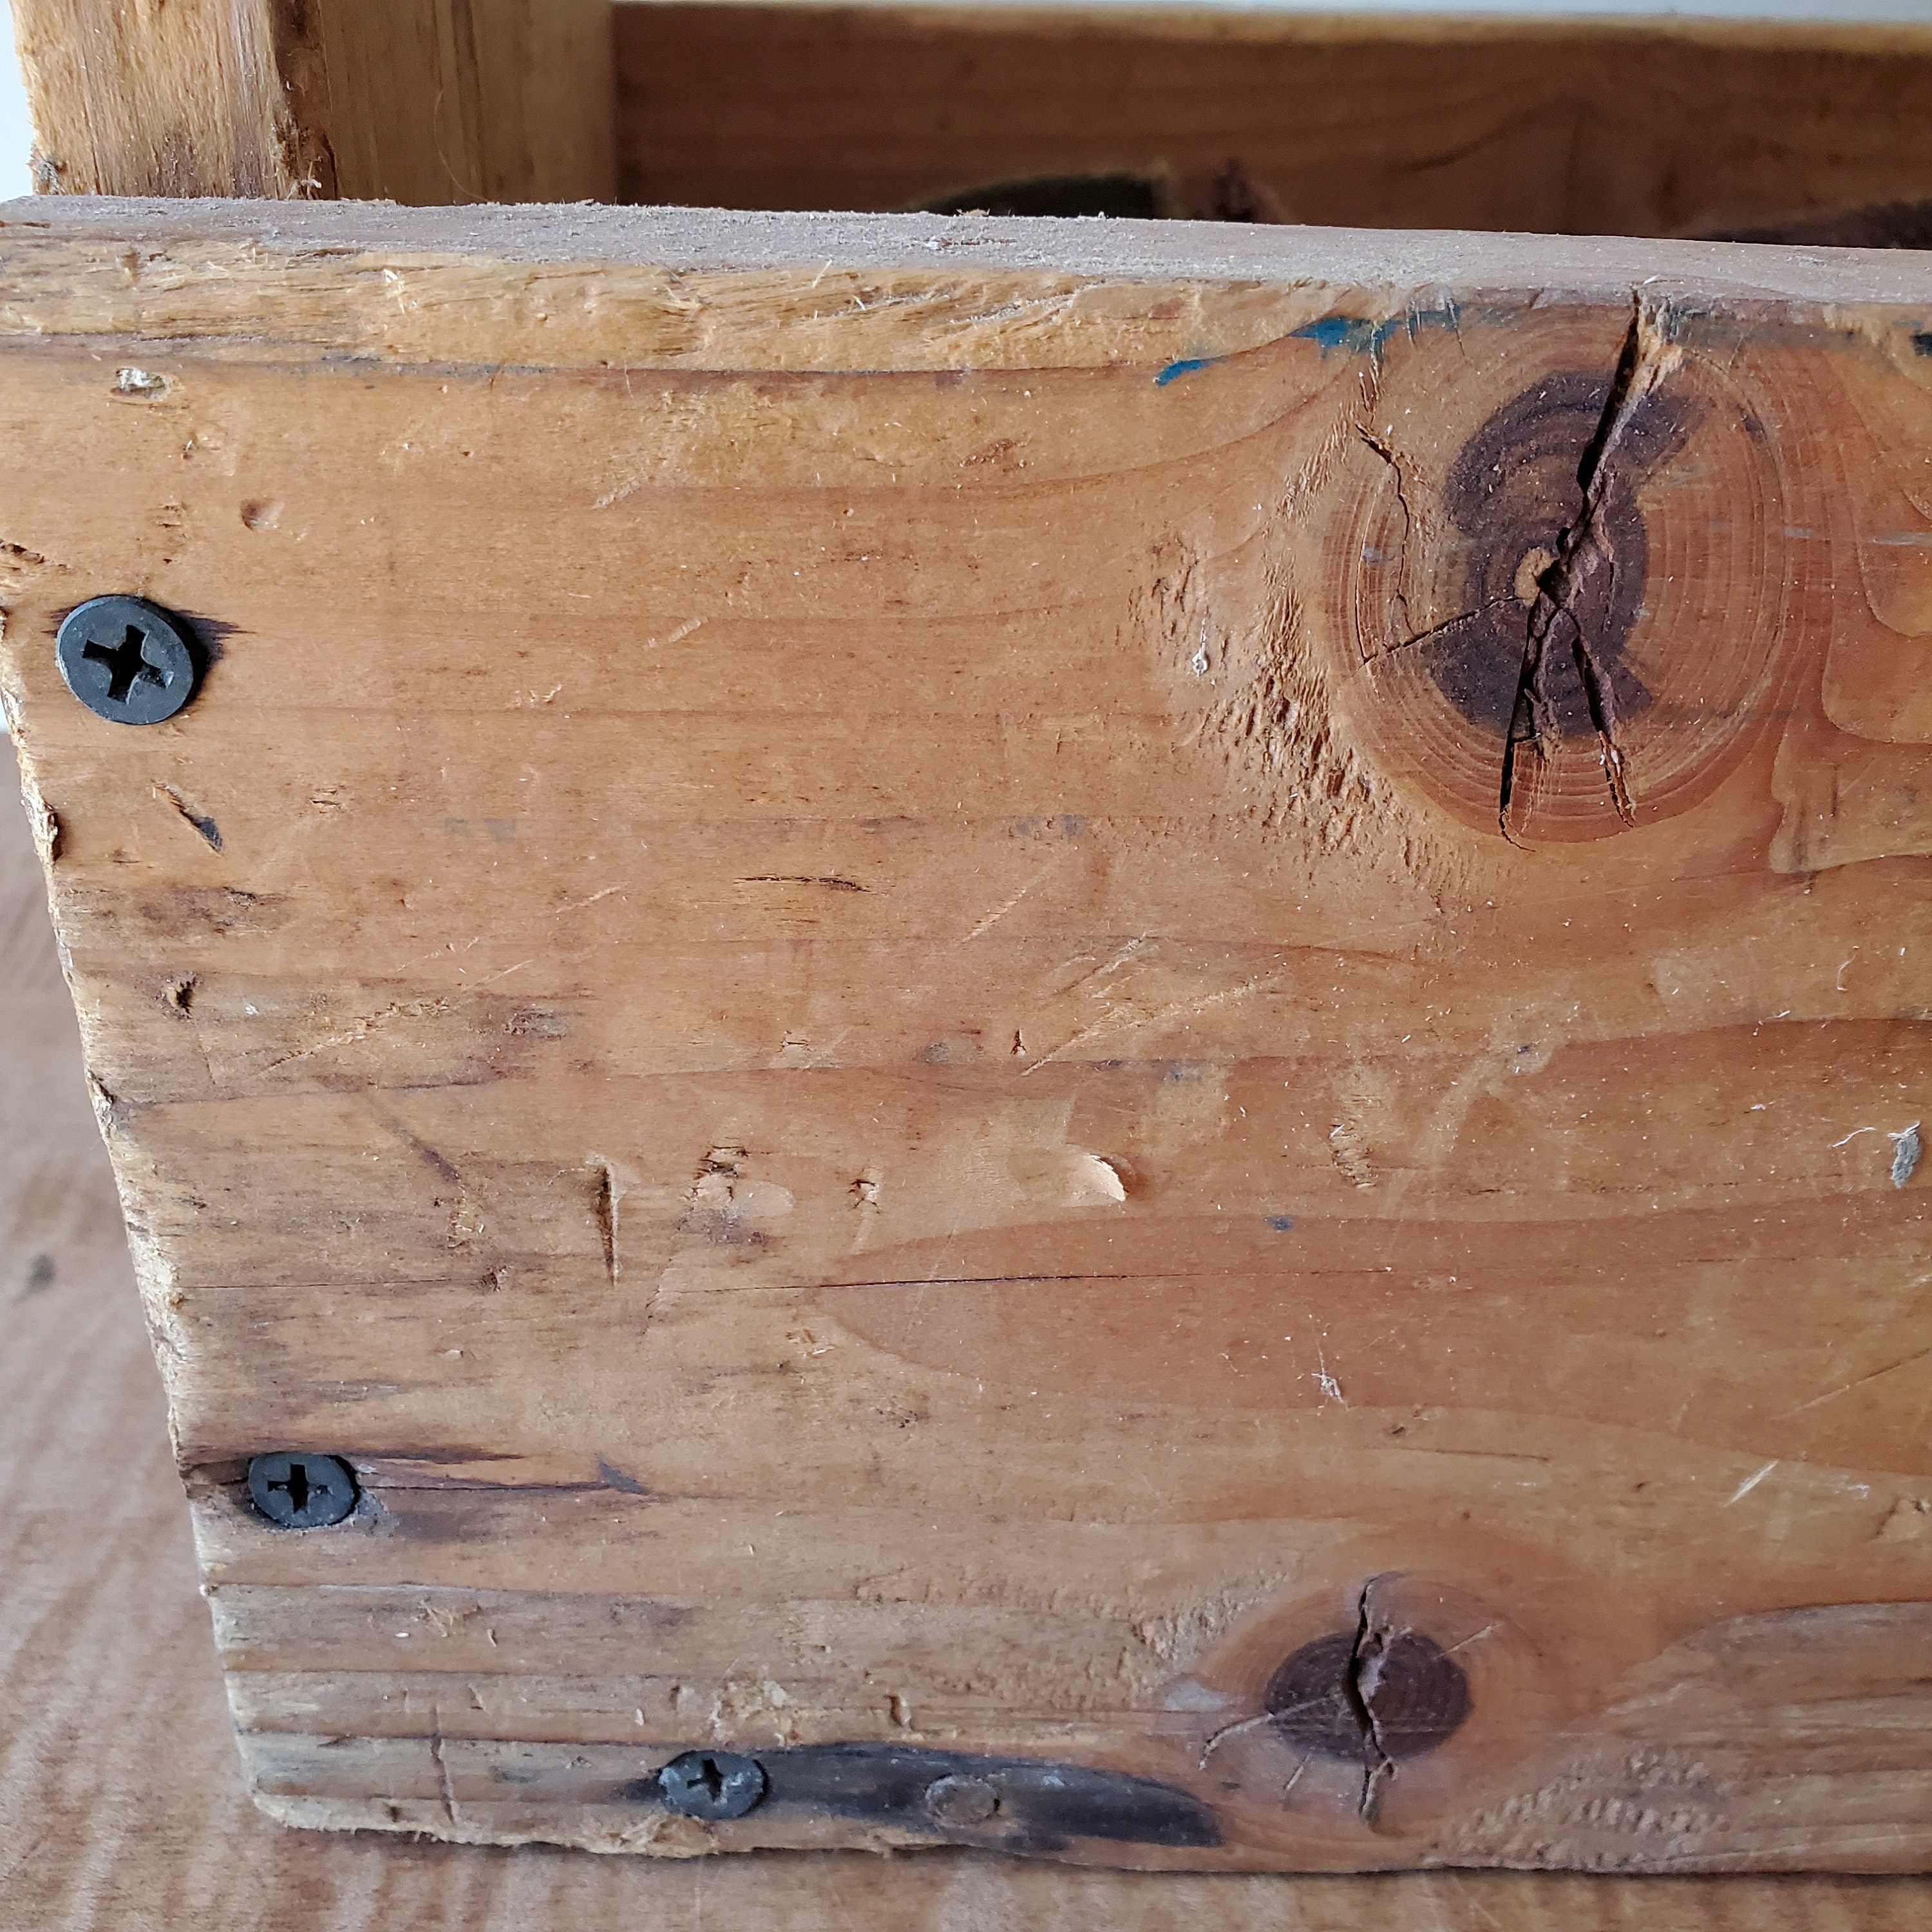 Wooden Tool Box / Plain Unpainted Caddy Carrier Holder